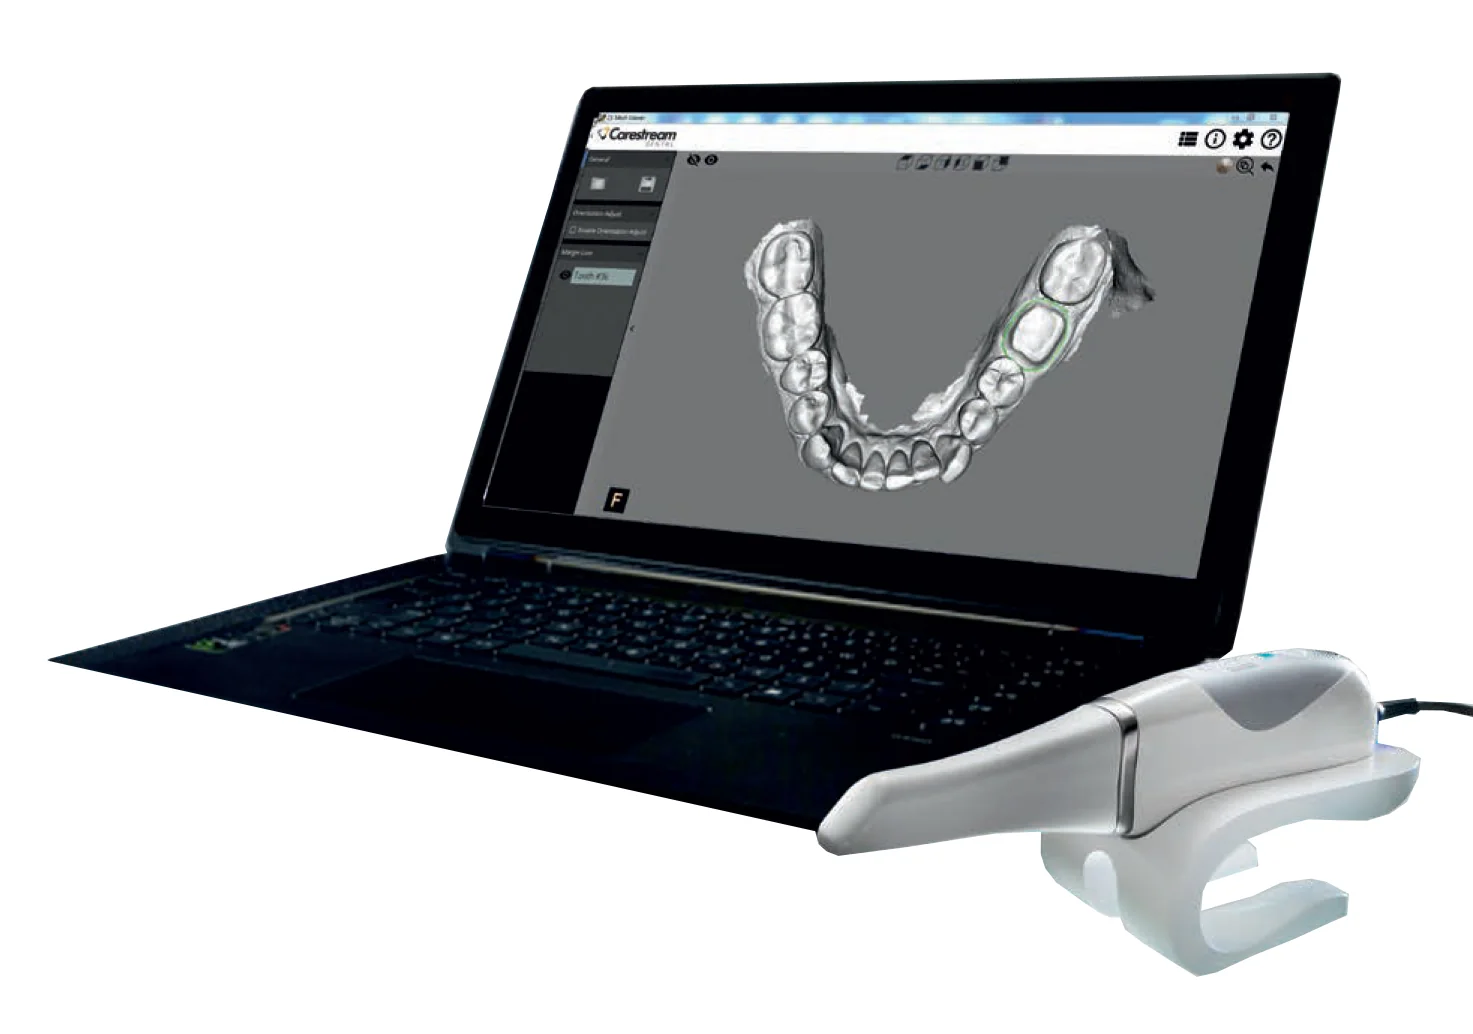 Carestream CS 3600 intraoral scanner with laptop